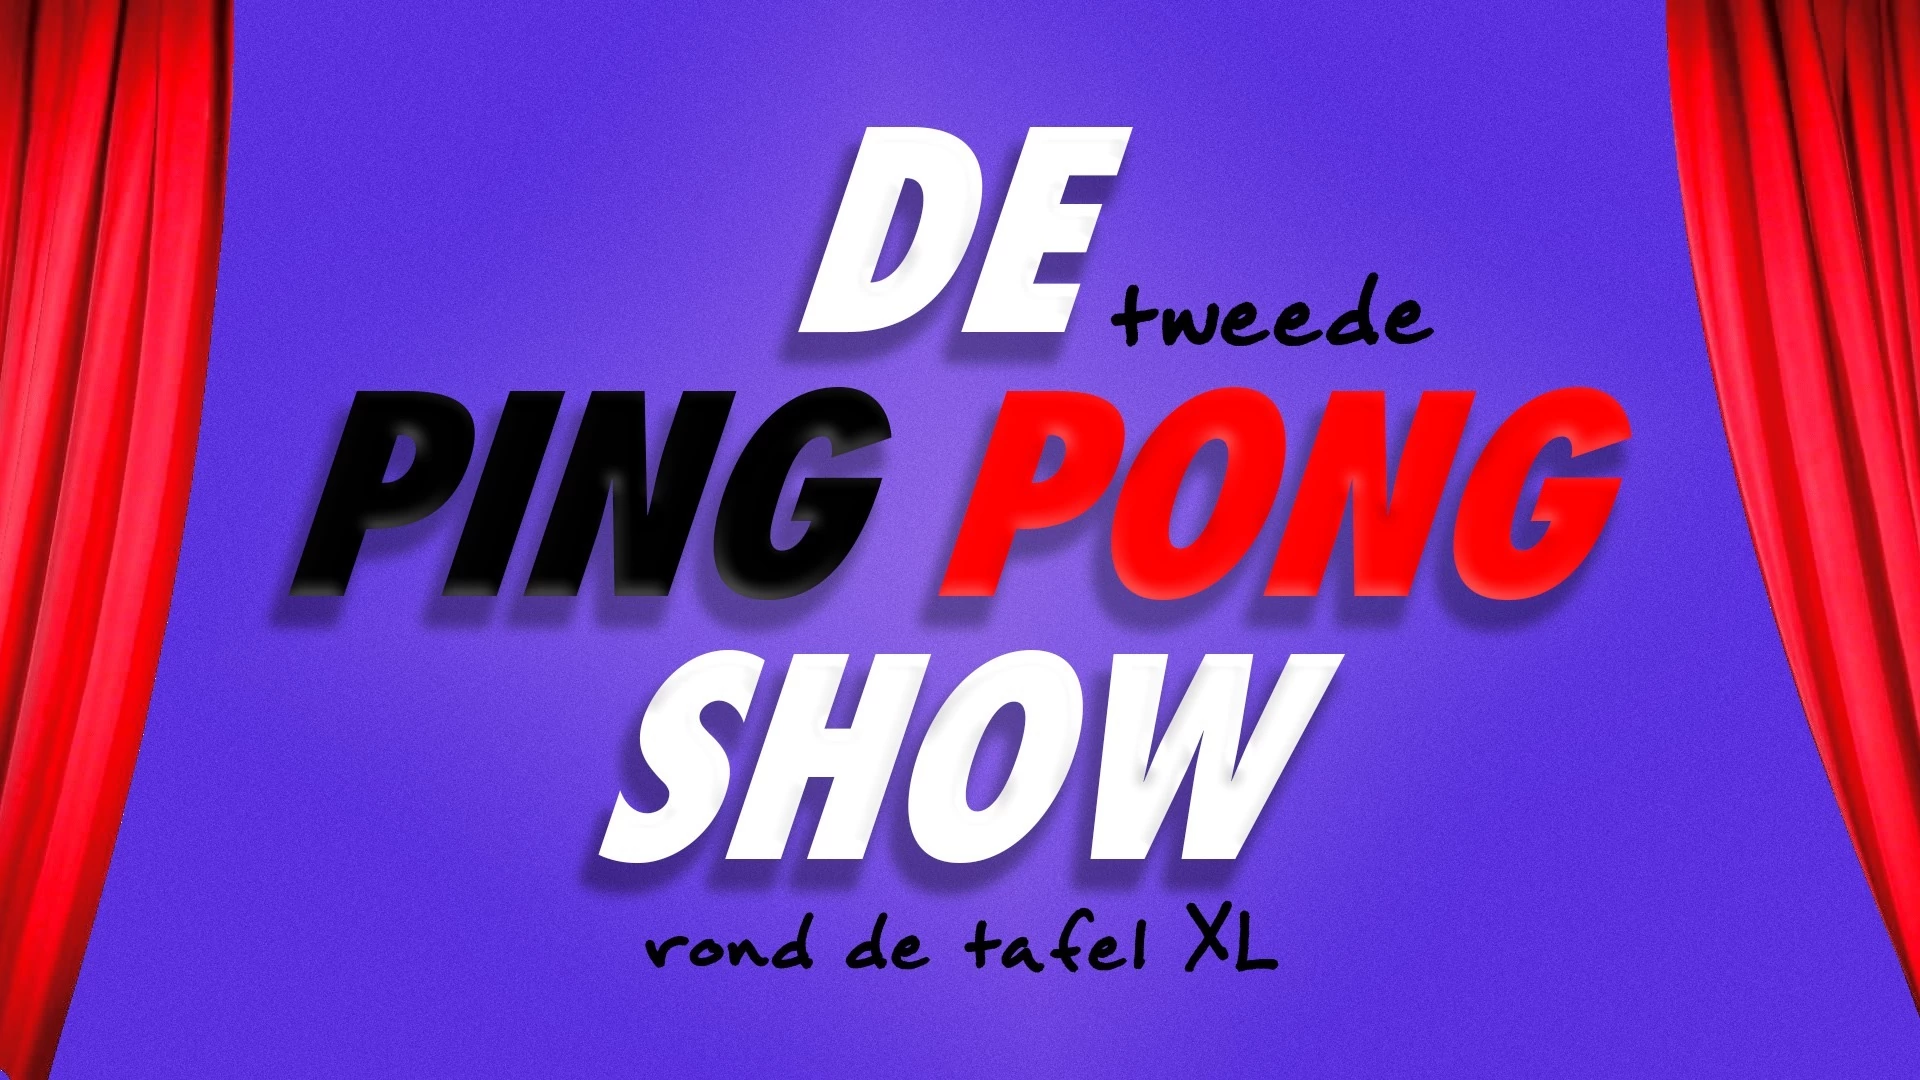 Pingpong show